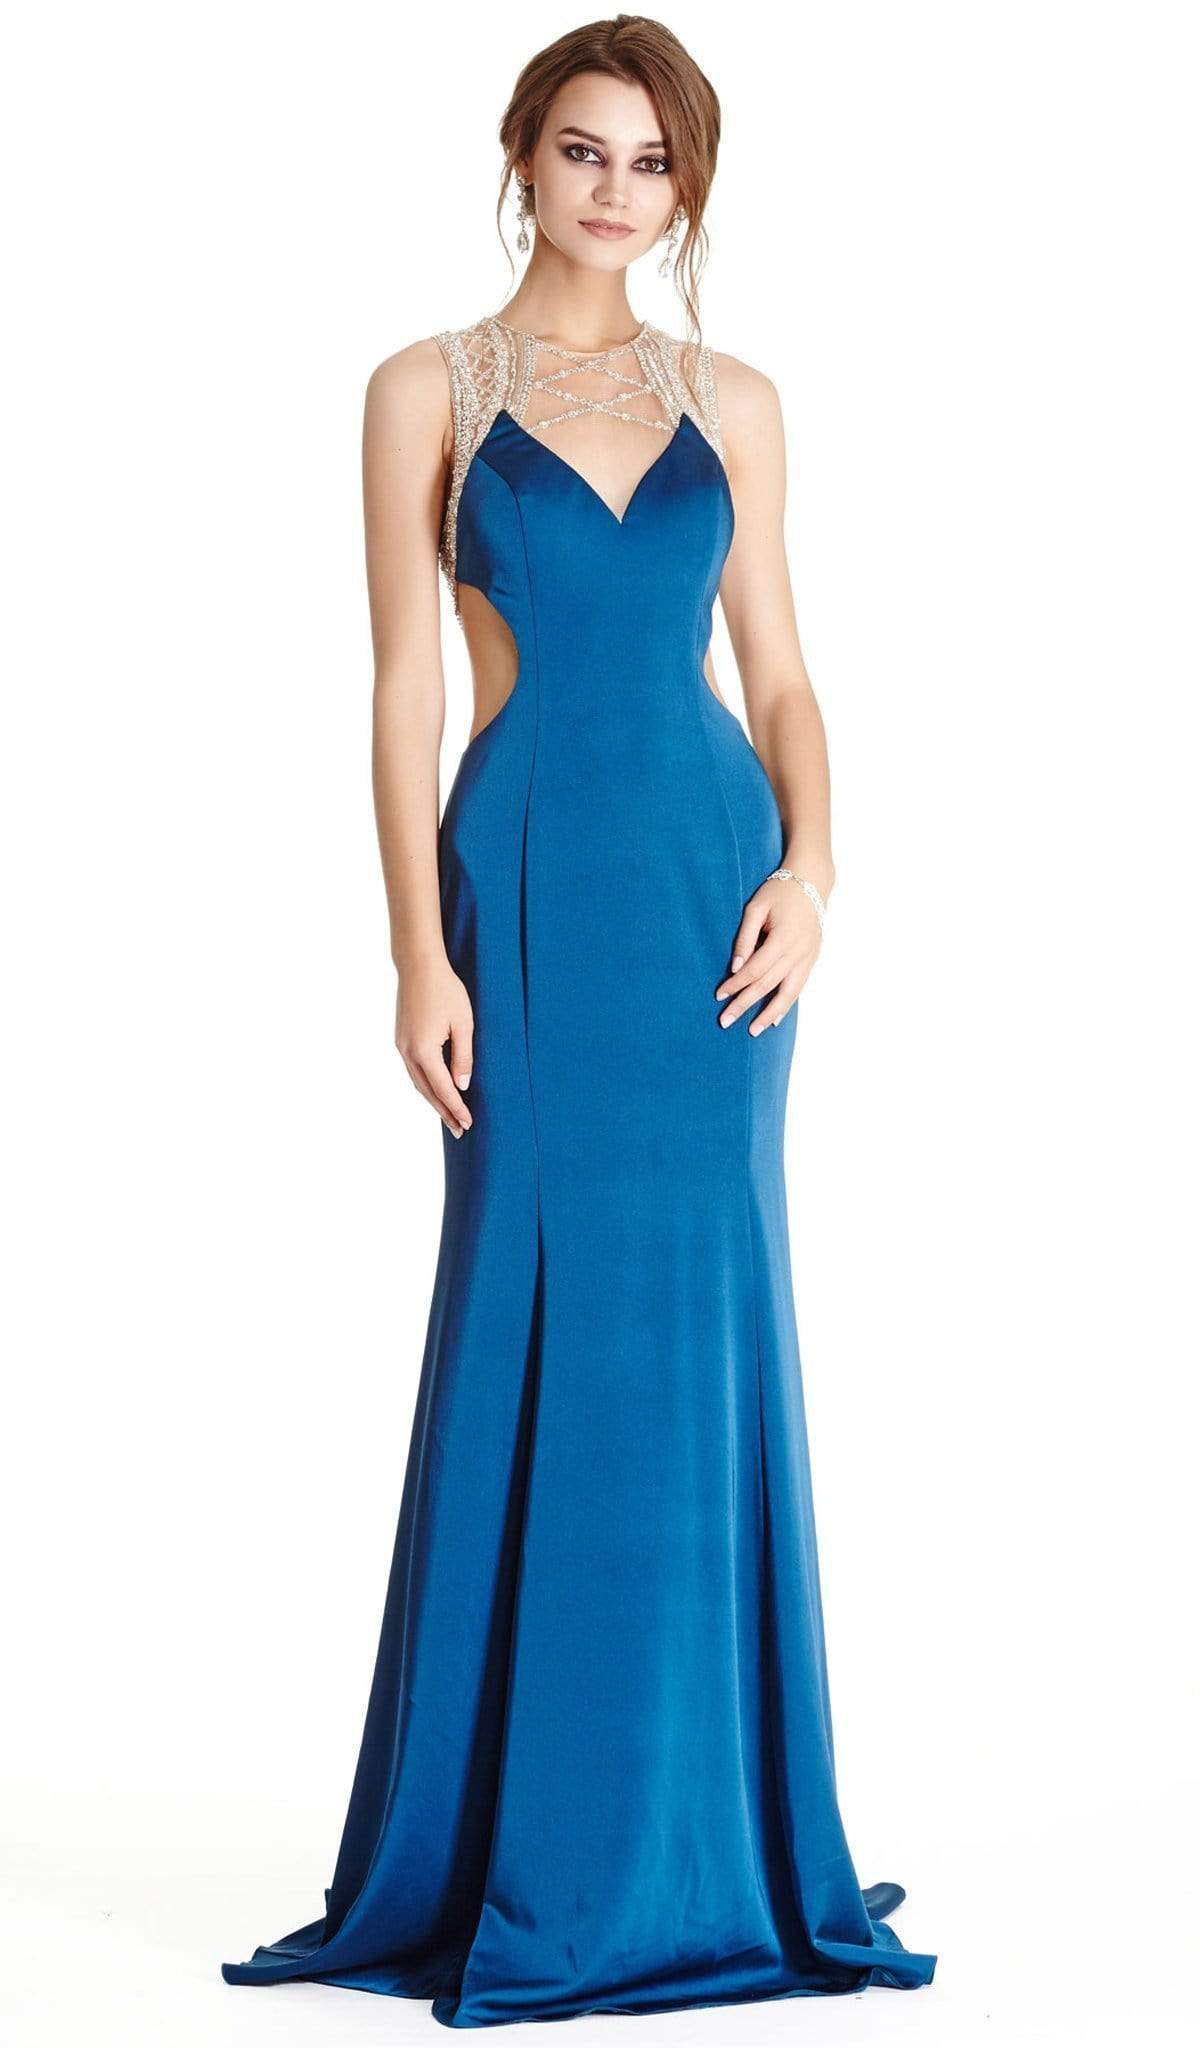 Image of Aspeed Design - Embellished Illusion Jewel Neck Evening Dress